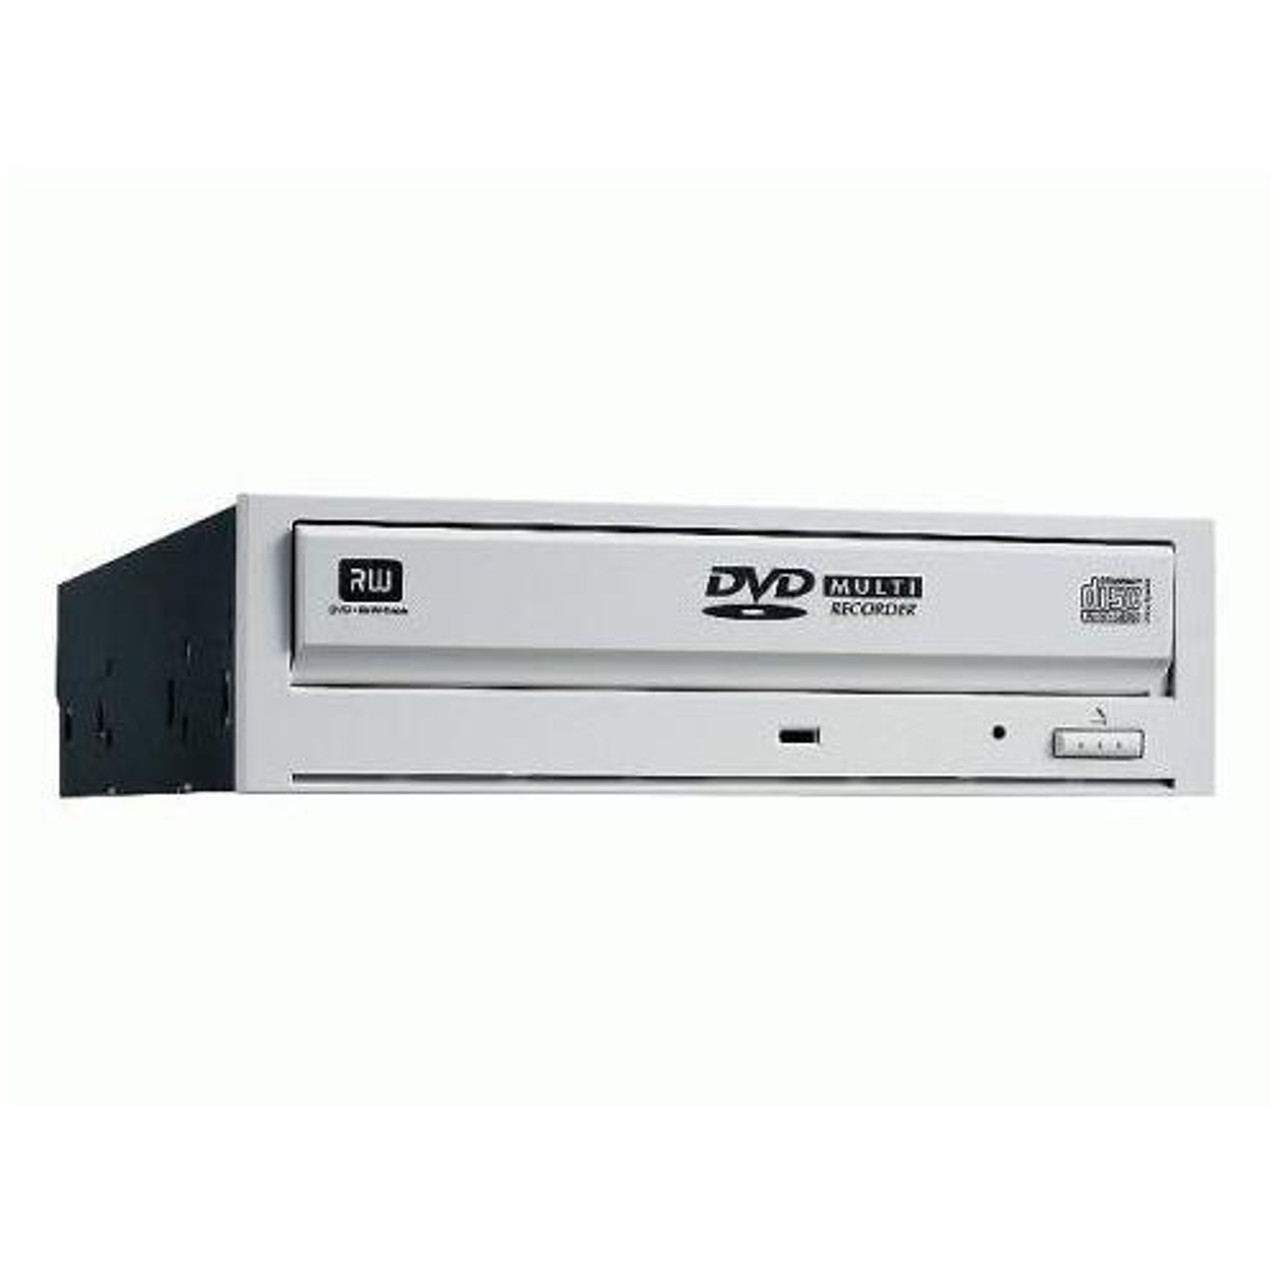 SW-9573-C Panasonic 8x Multi DVD Burner IDE Supports Dvd-ram Cartridge